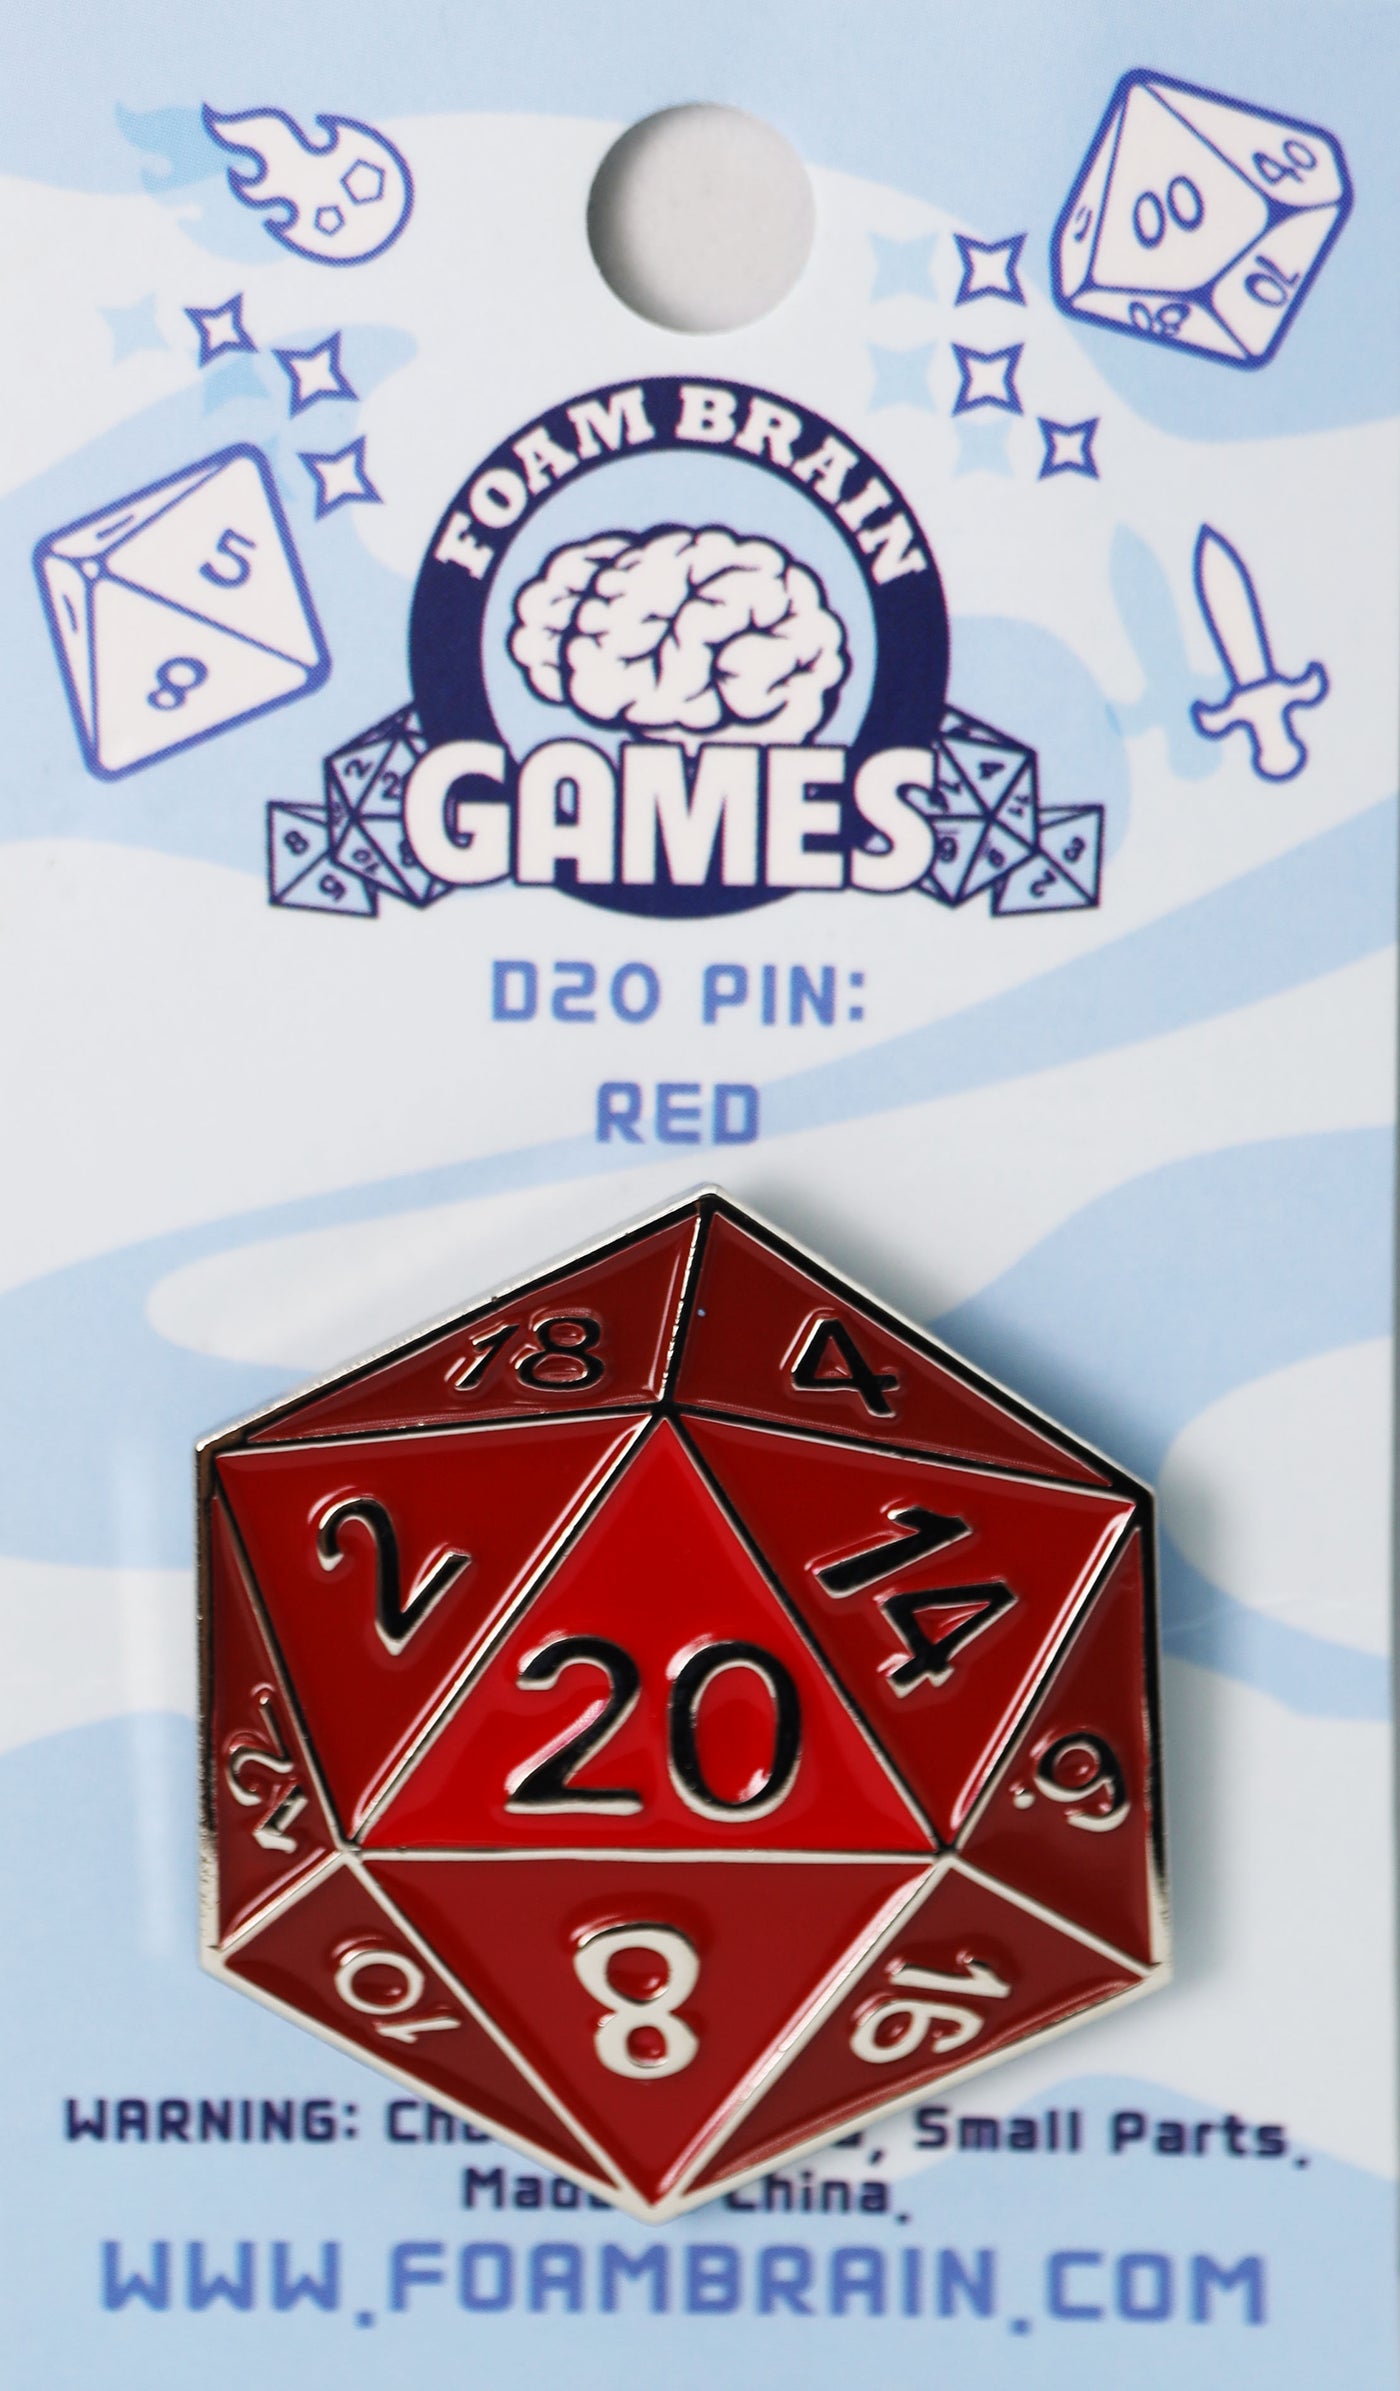 D20 Pin: Red Enamel Pin Foam Brain Games